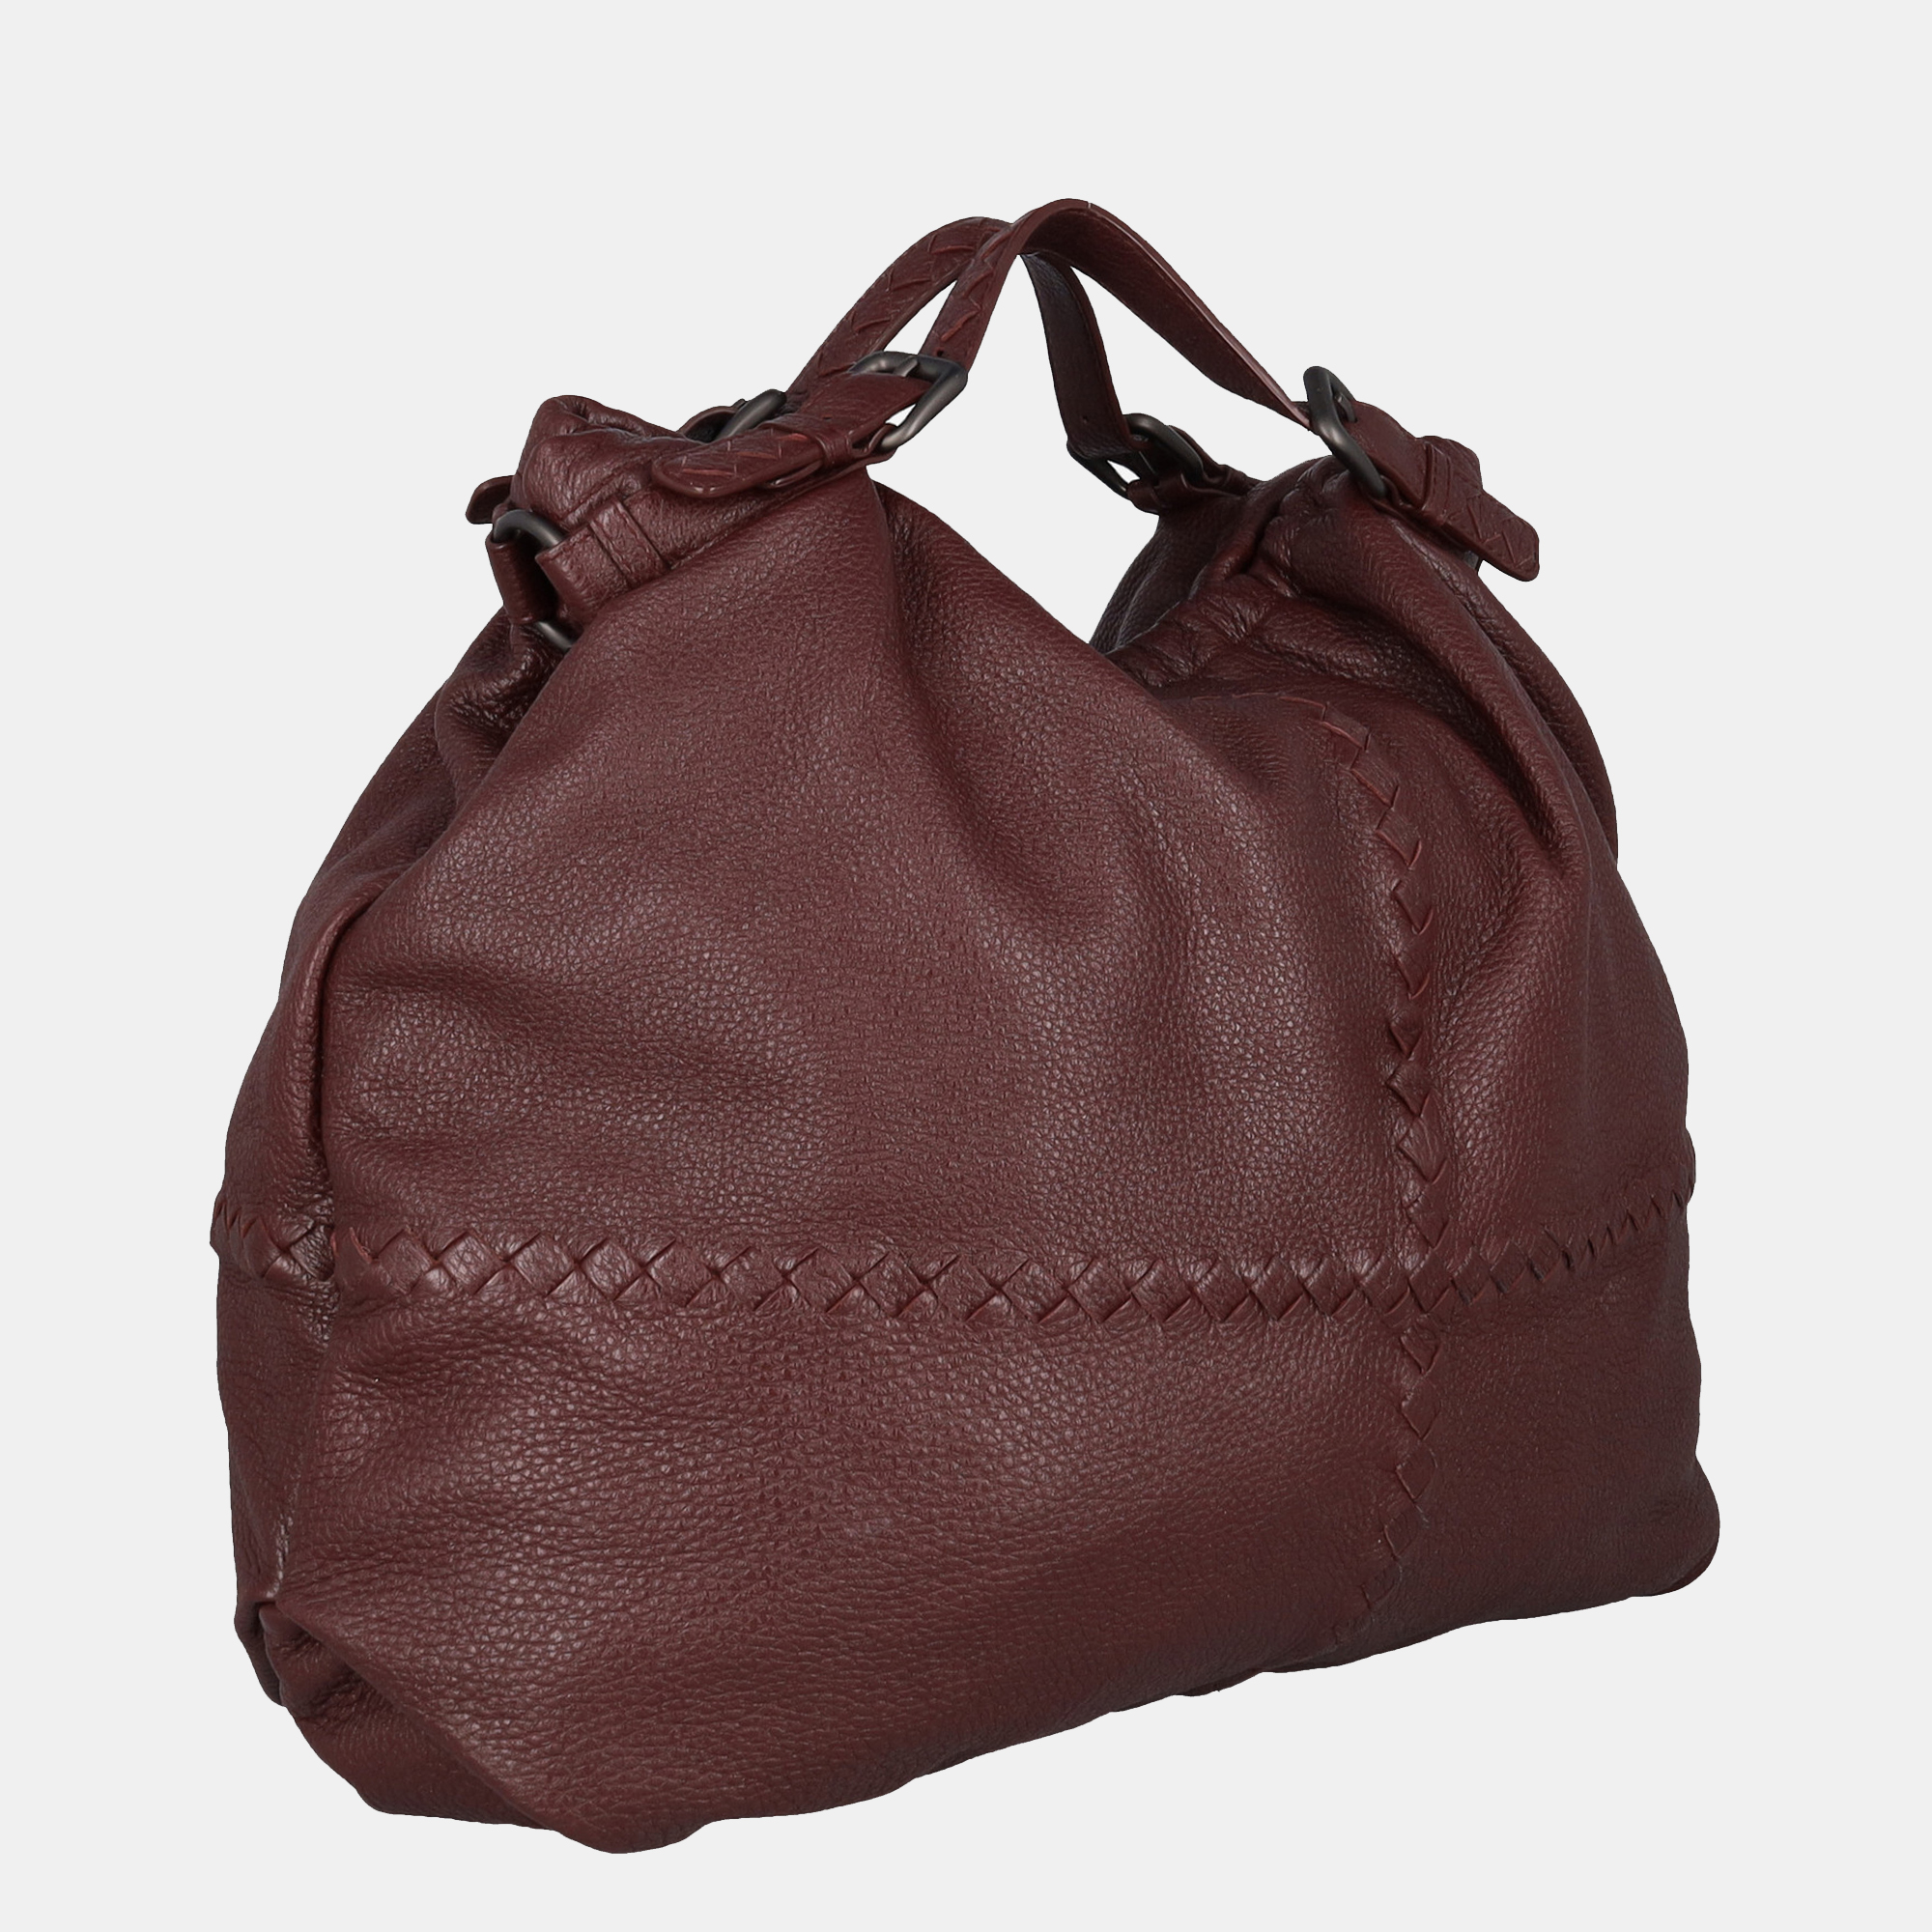 Bottega Veneta  Women's Leather Tote Bag - Burgundy - One Size